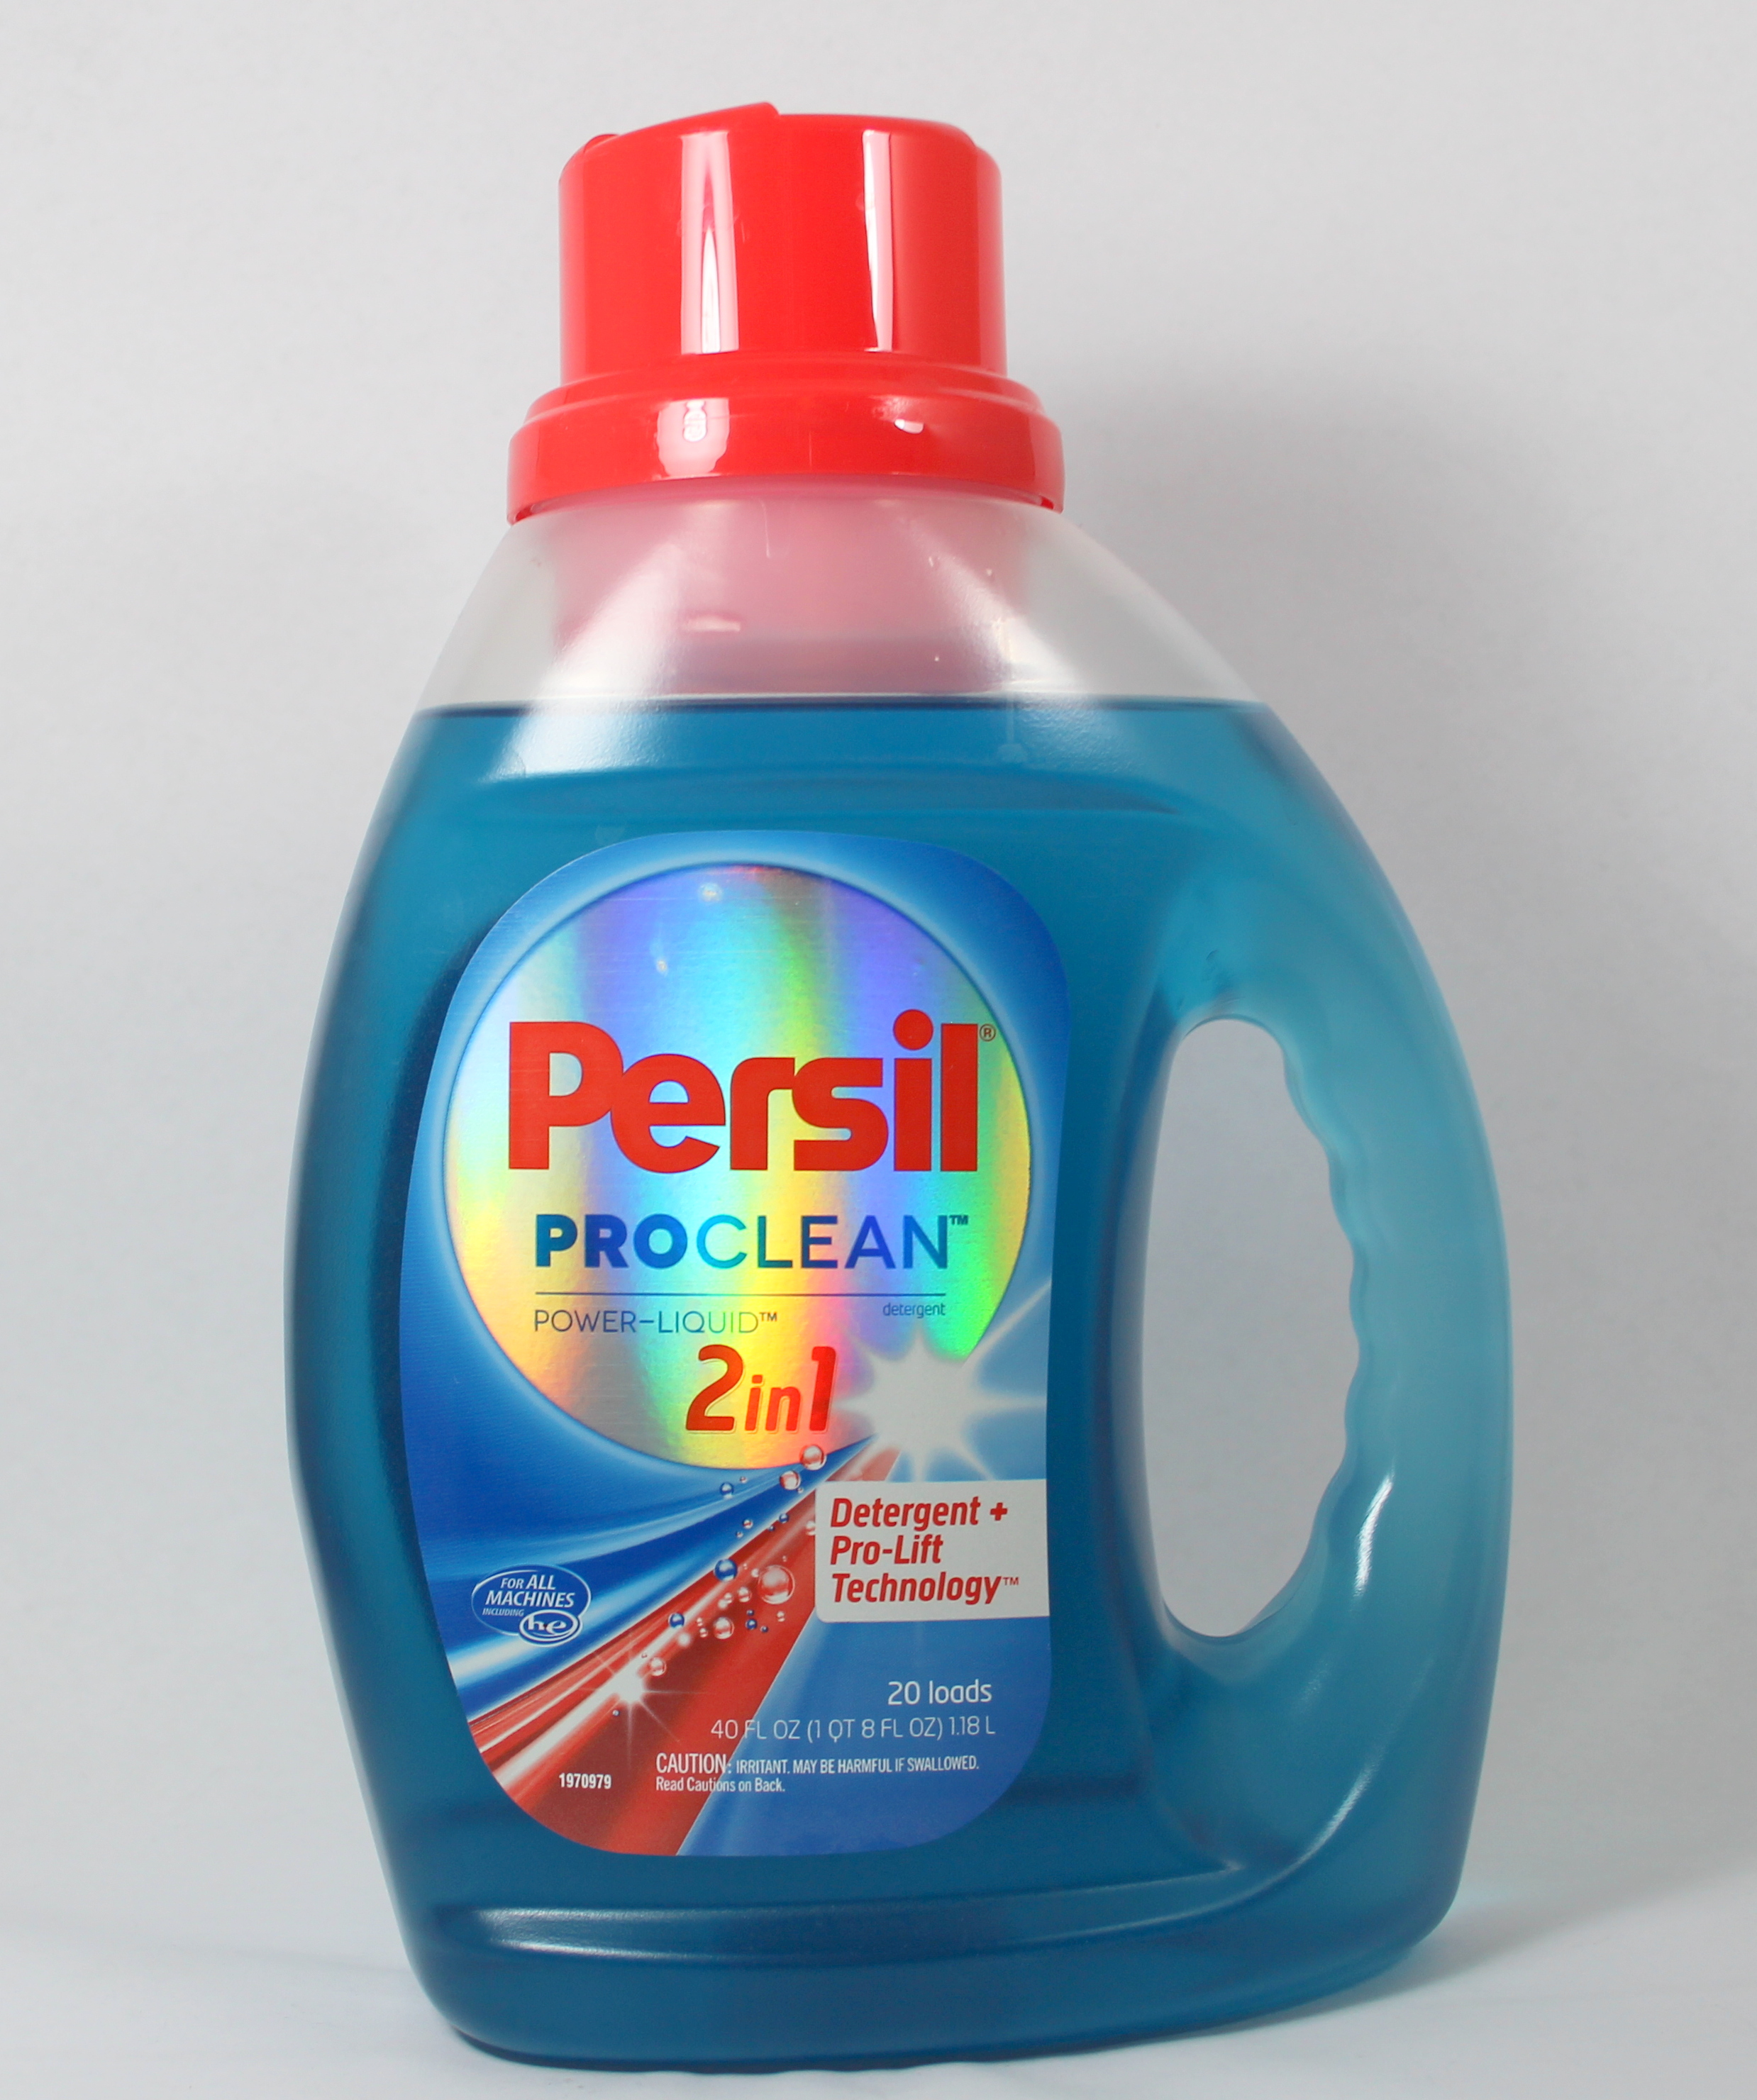 Persil PROCLEAN Laundry Detergent